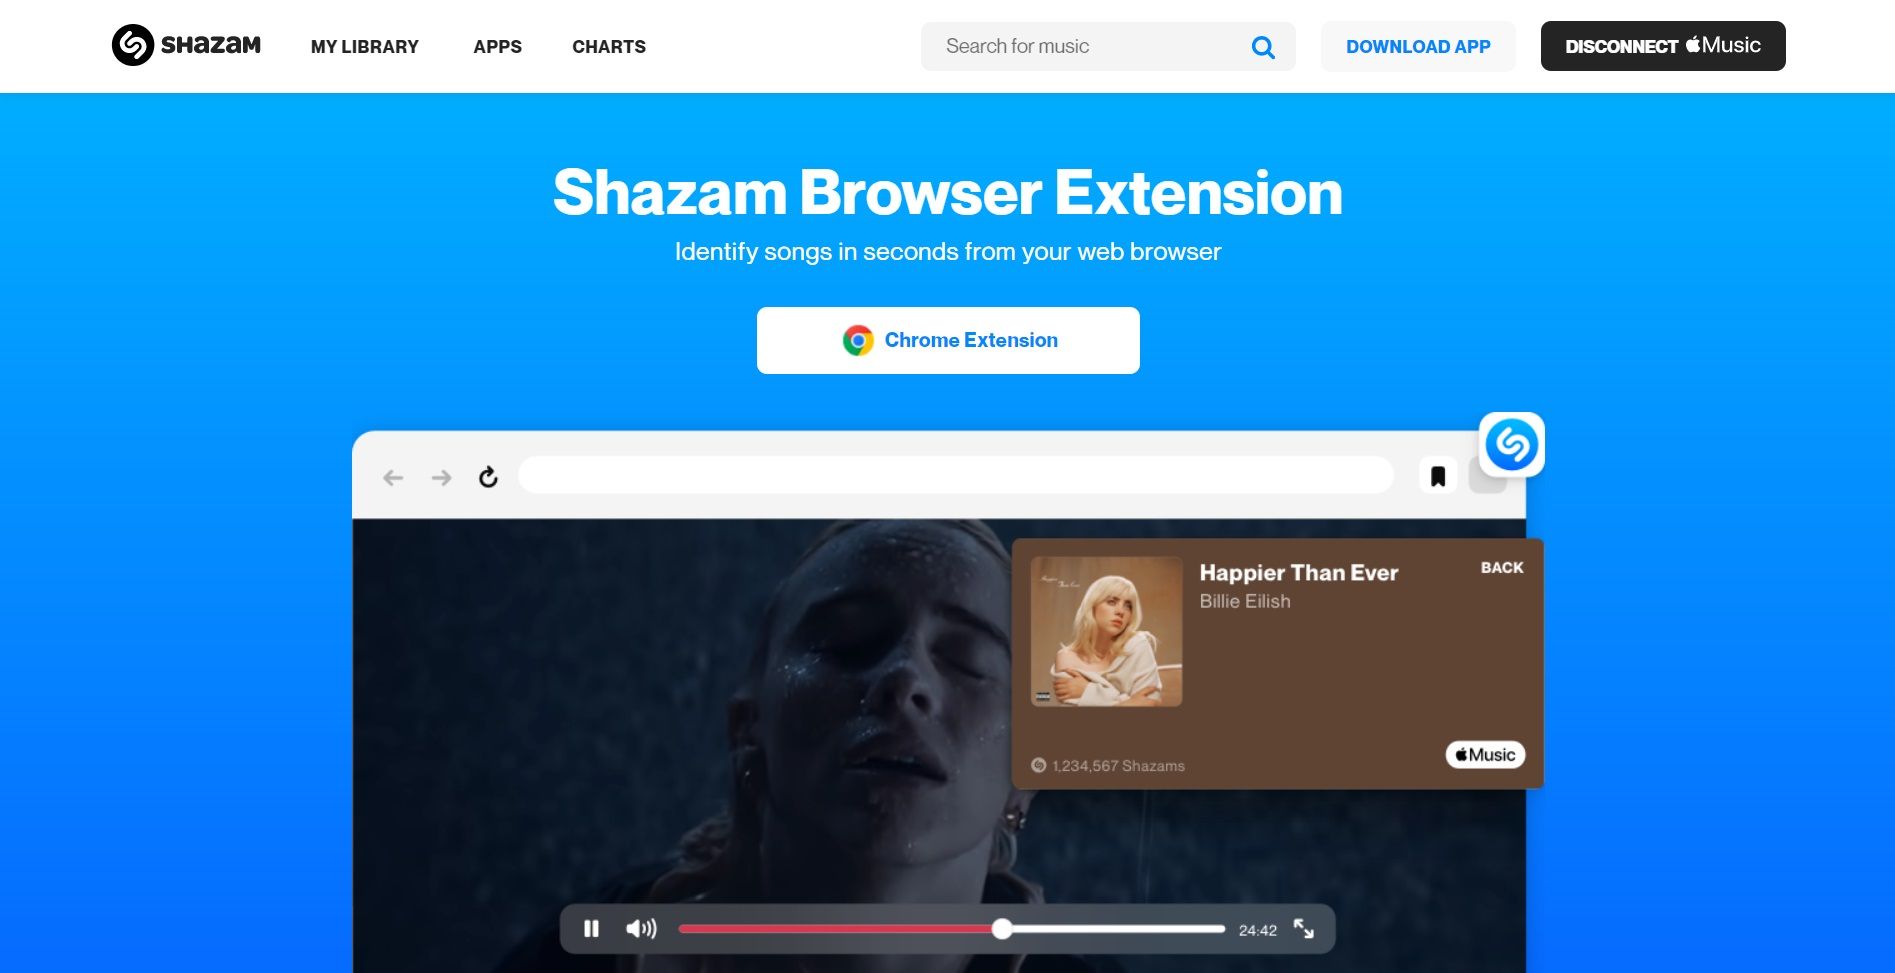 Shazam website info page